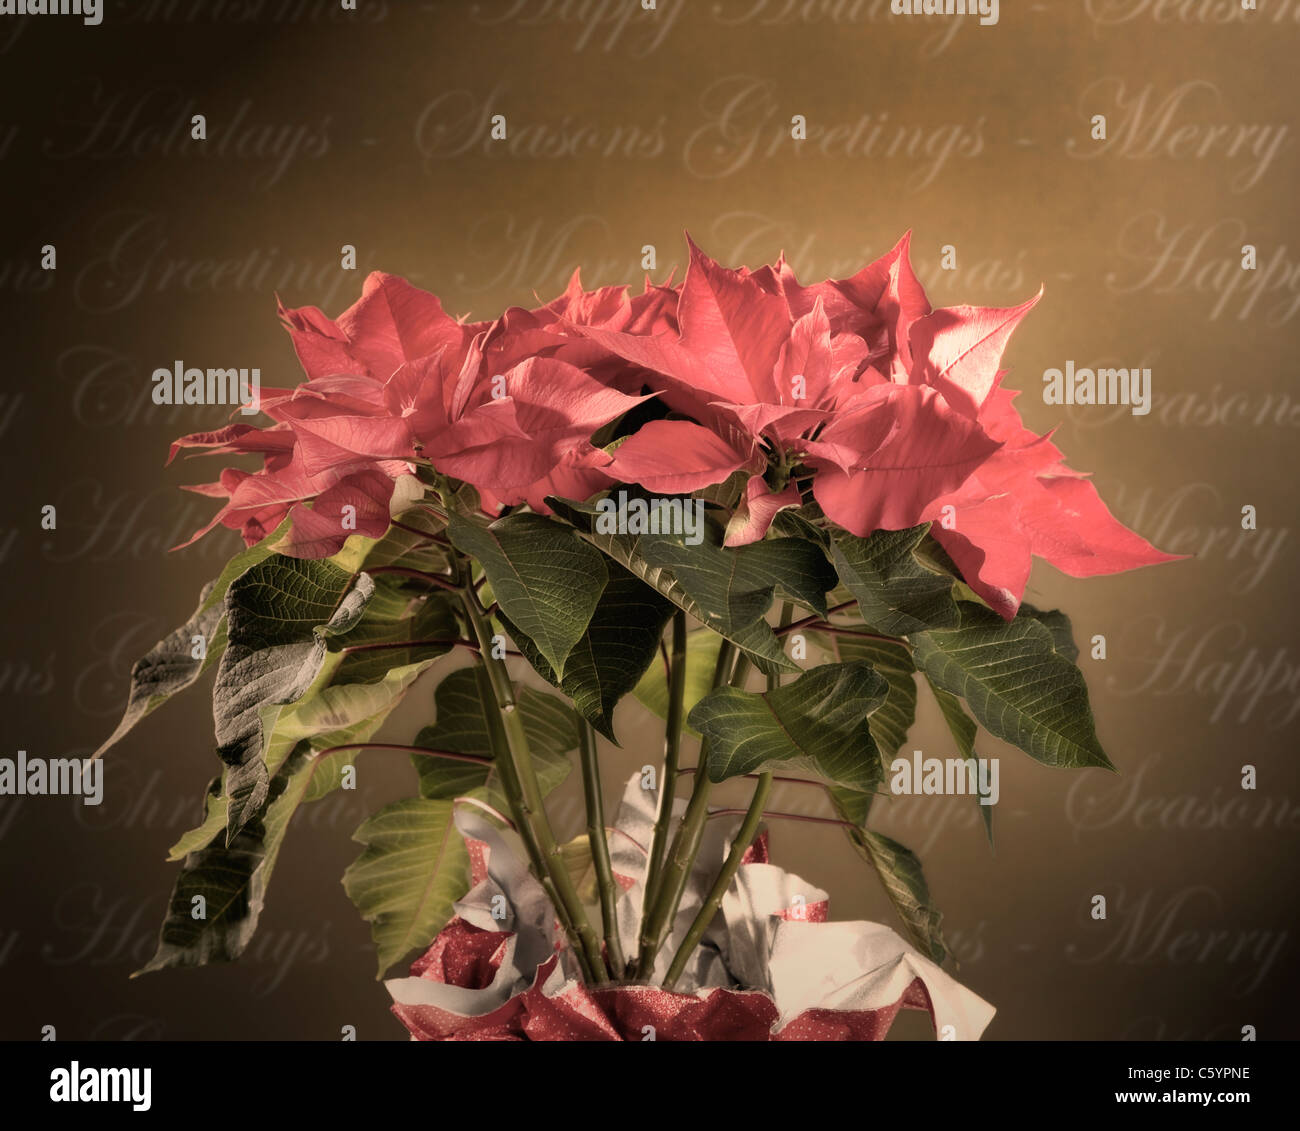 USA, Illinois, Metamora, poinsettia and Christmas greetings Stock Photo